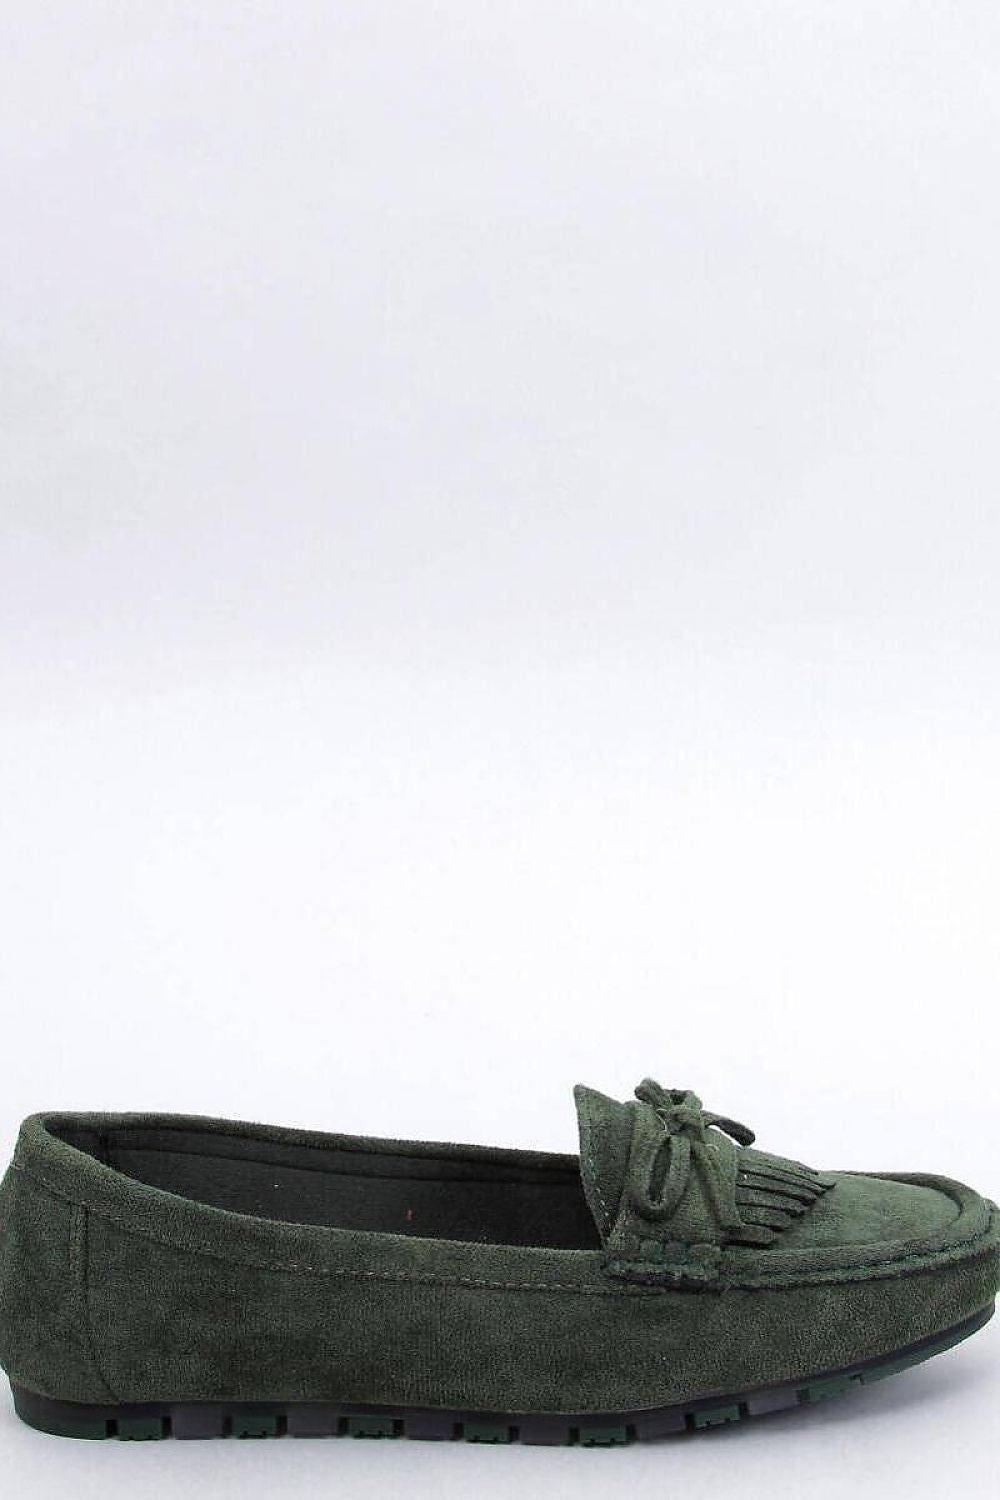 TEEK - Green Soft Bow Fringe Top Mocassin Loafers SHOES TEEK MH 6  